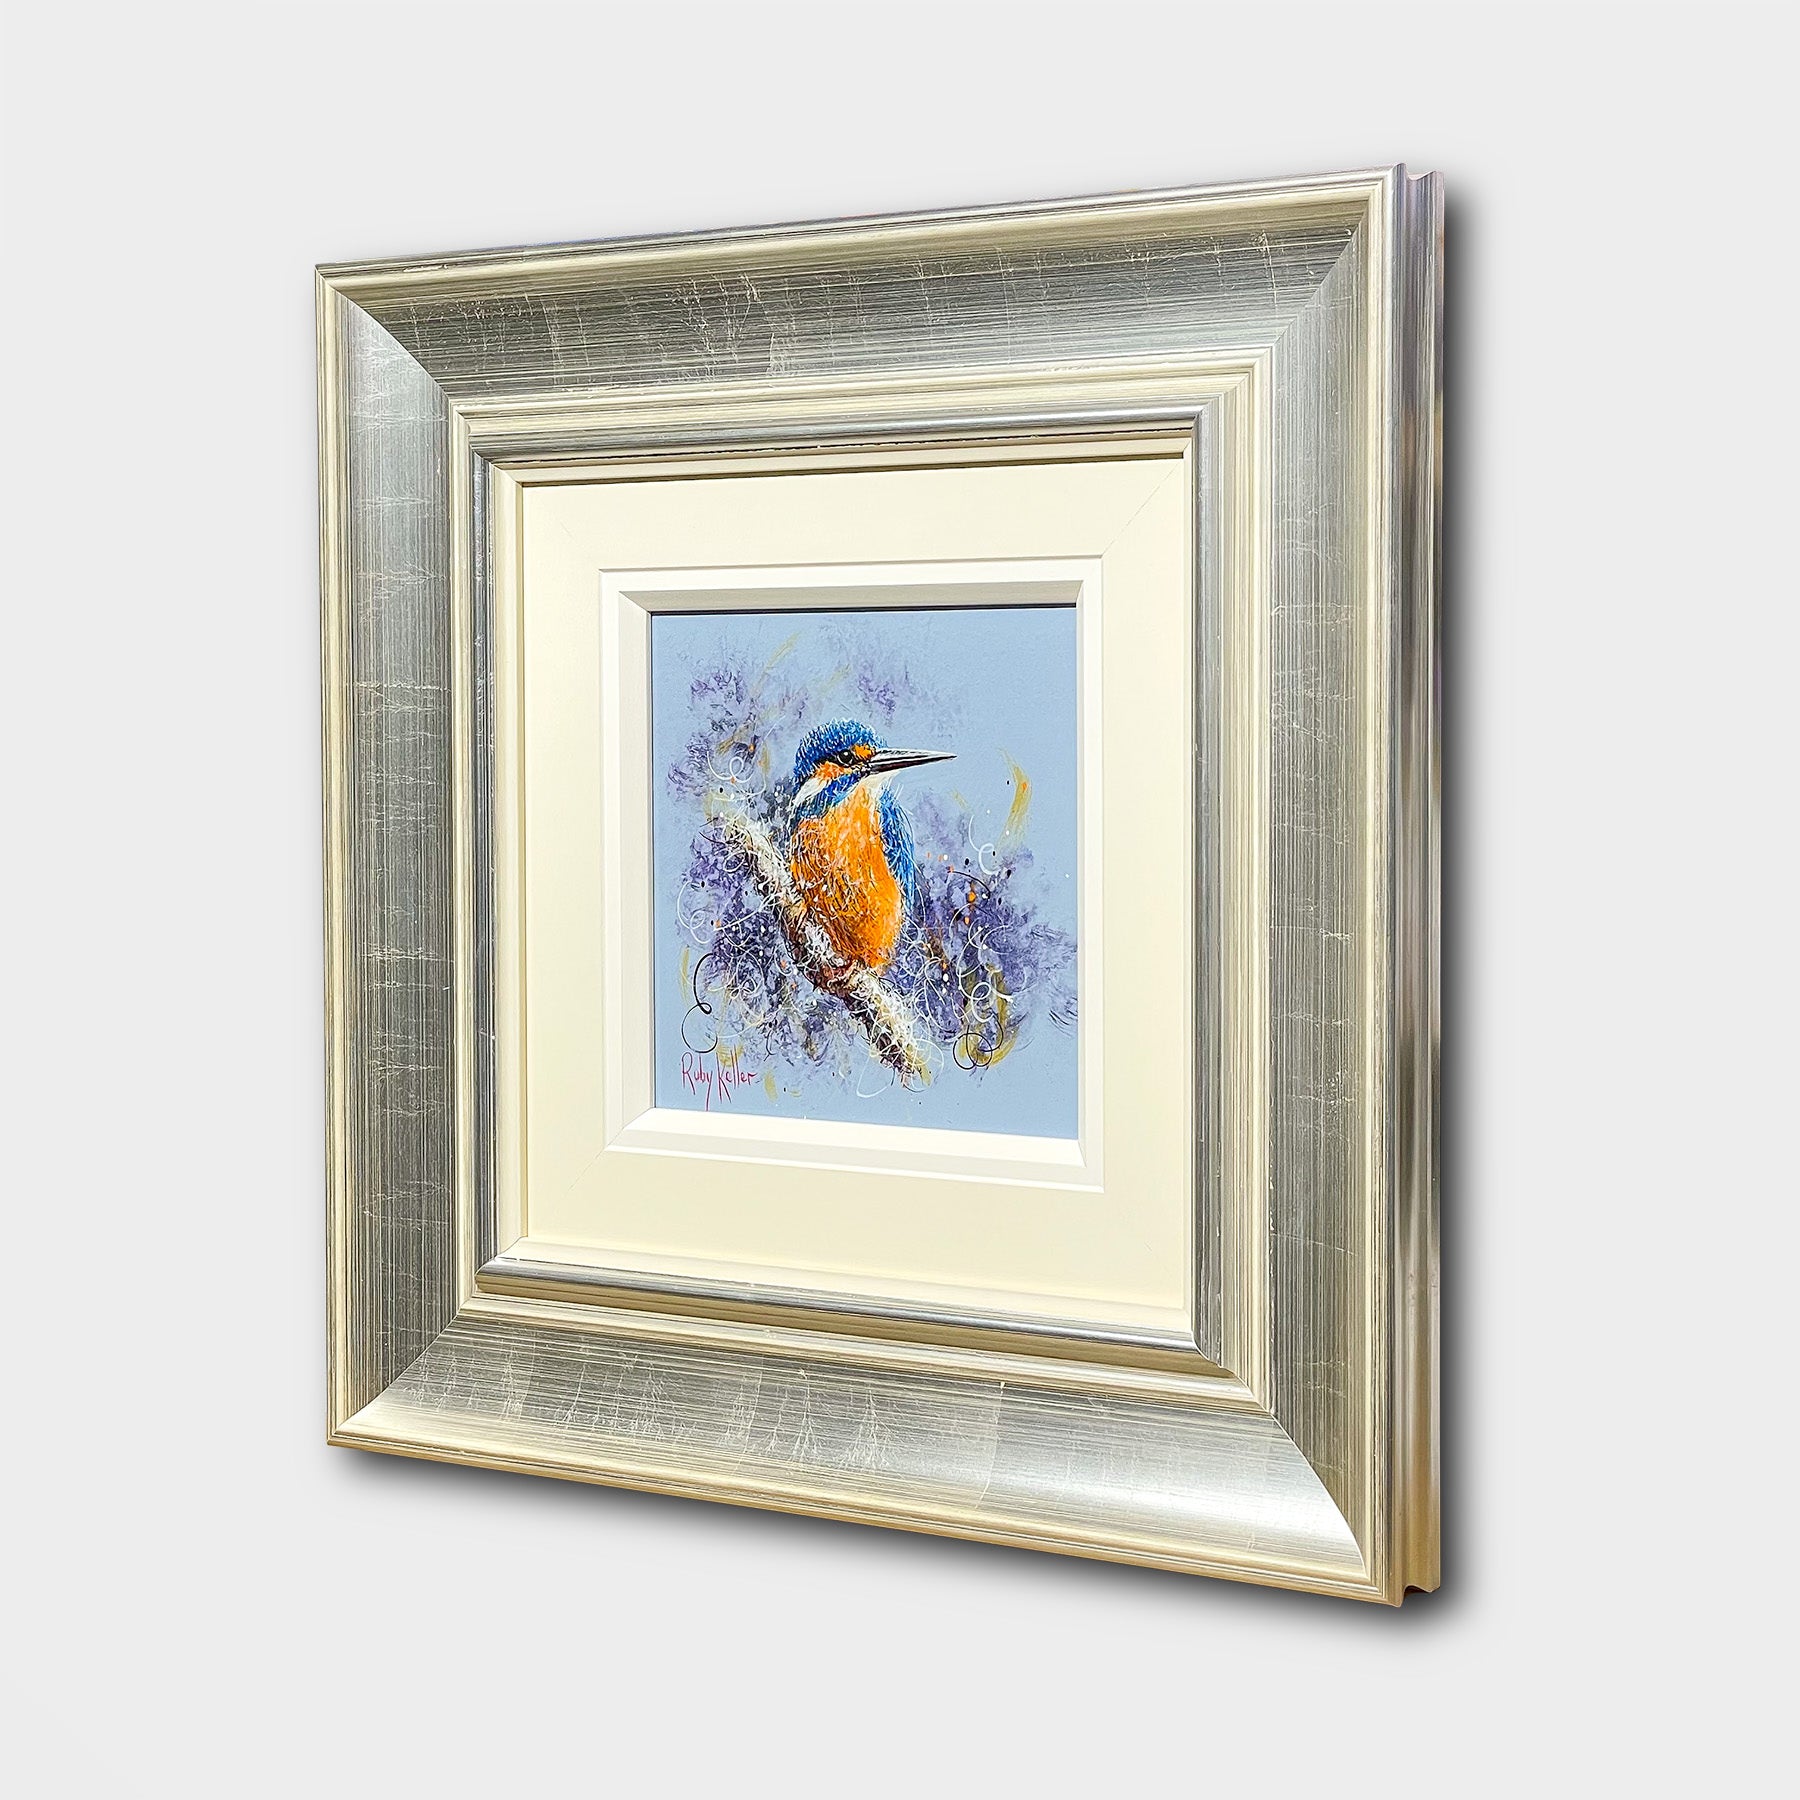 Kingfisher original painting by Ruby Keller